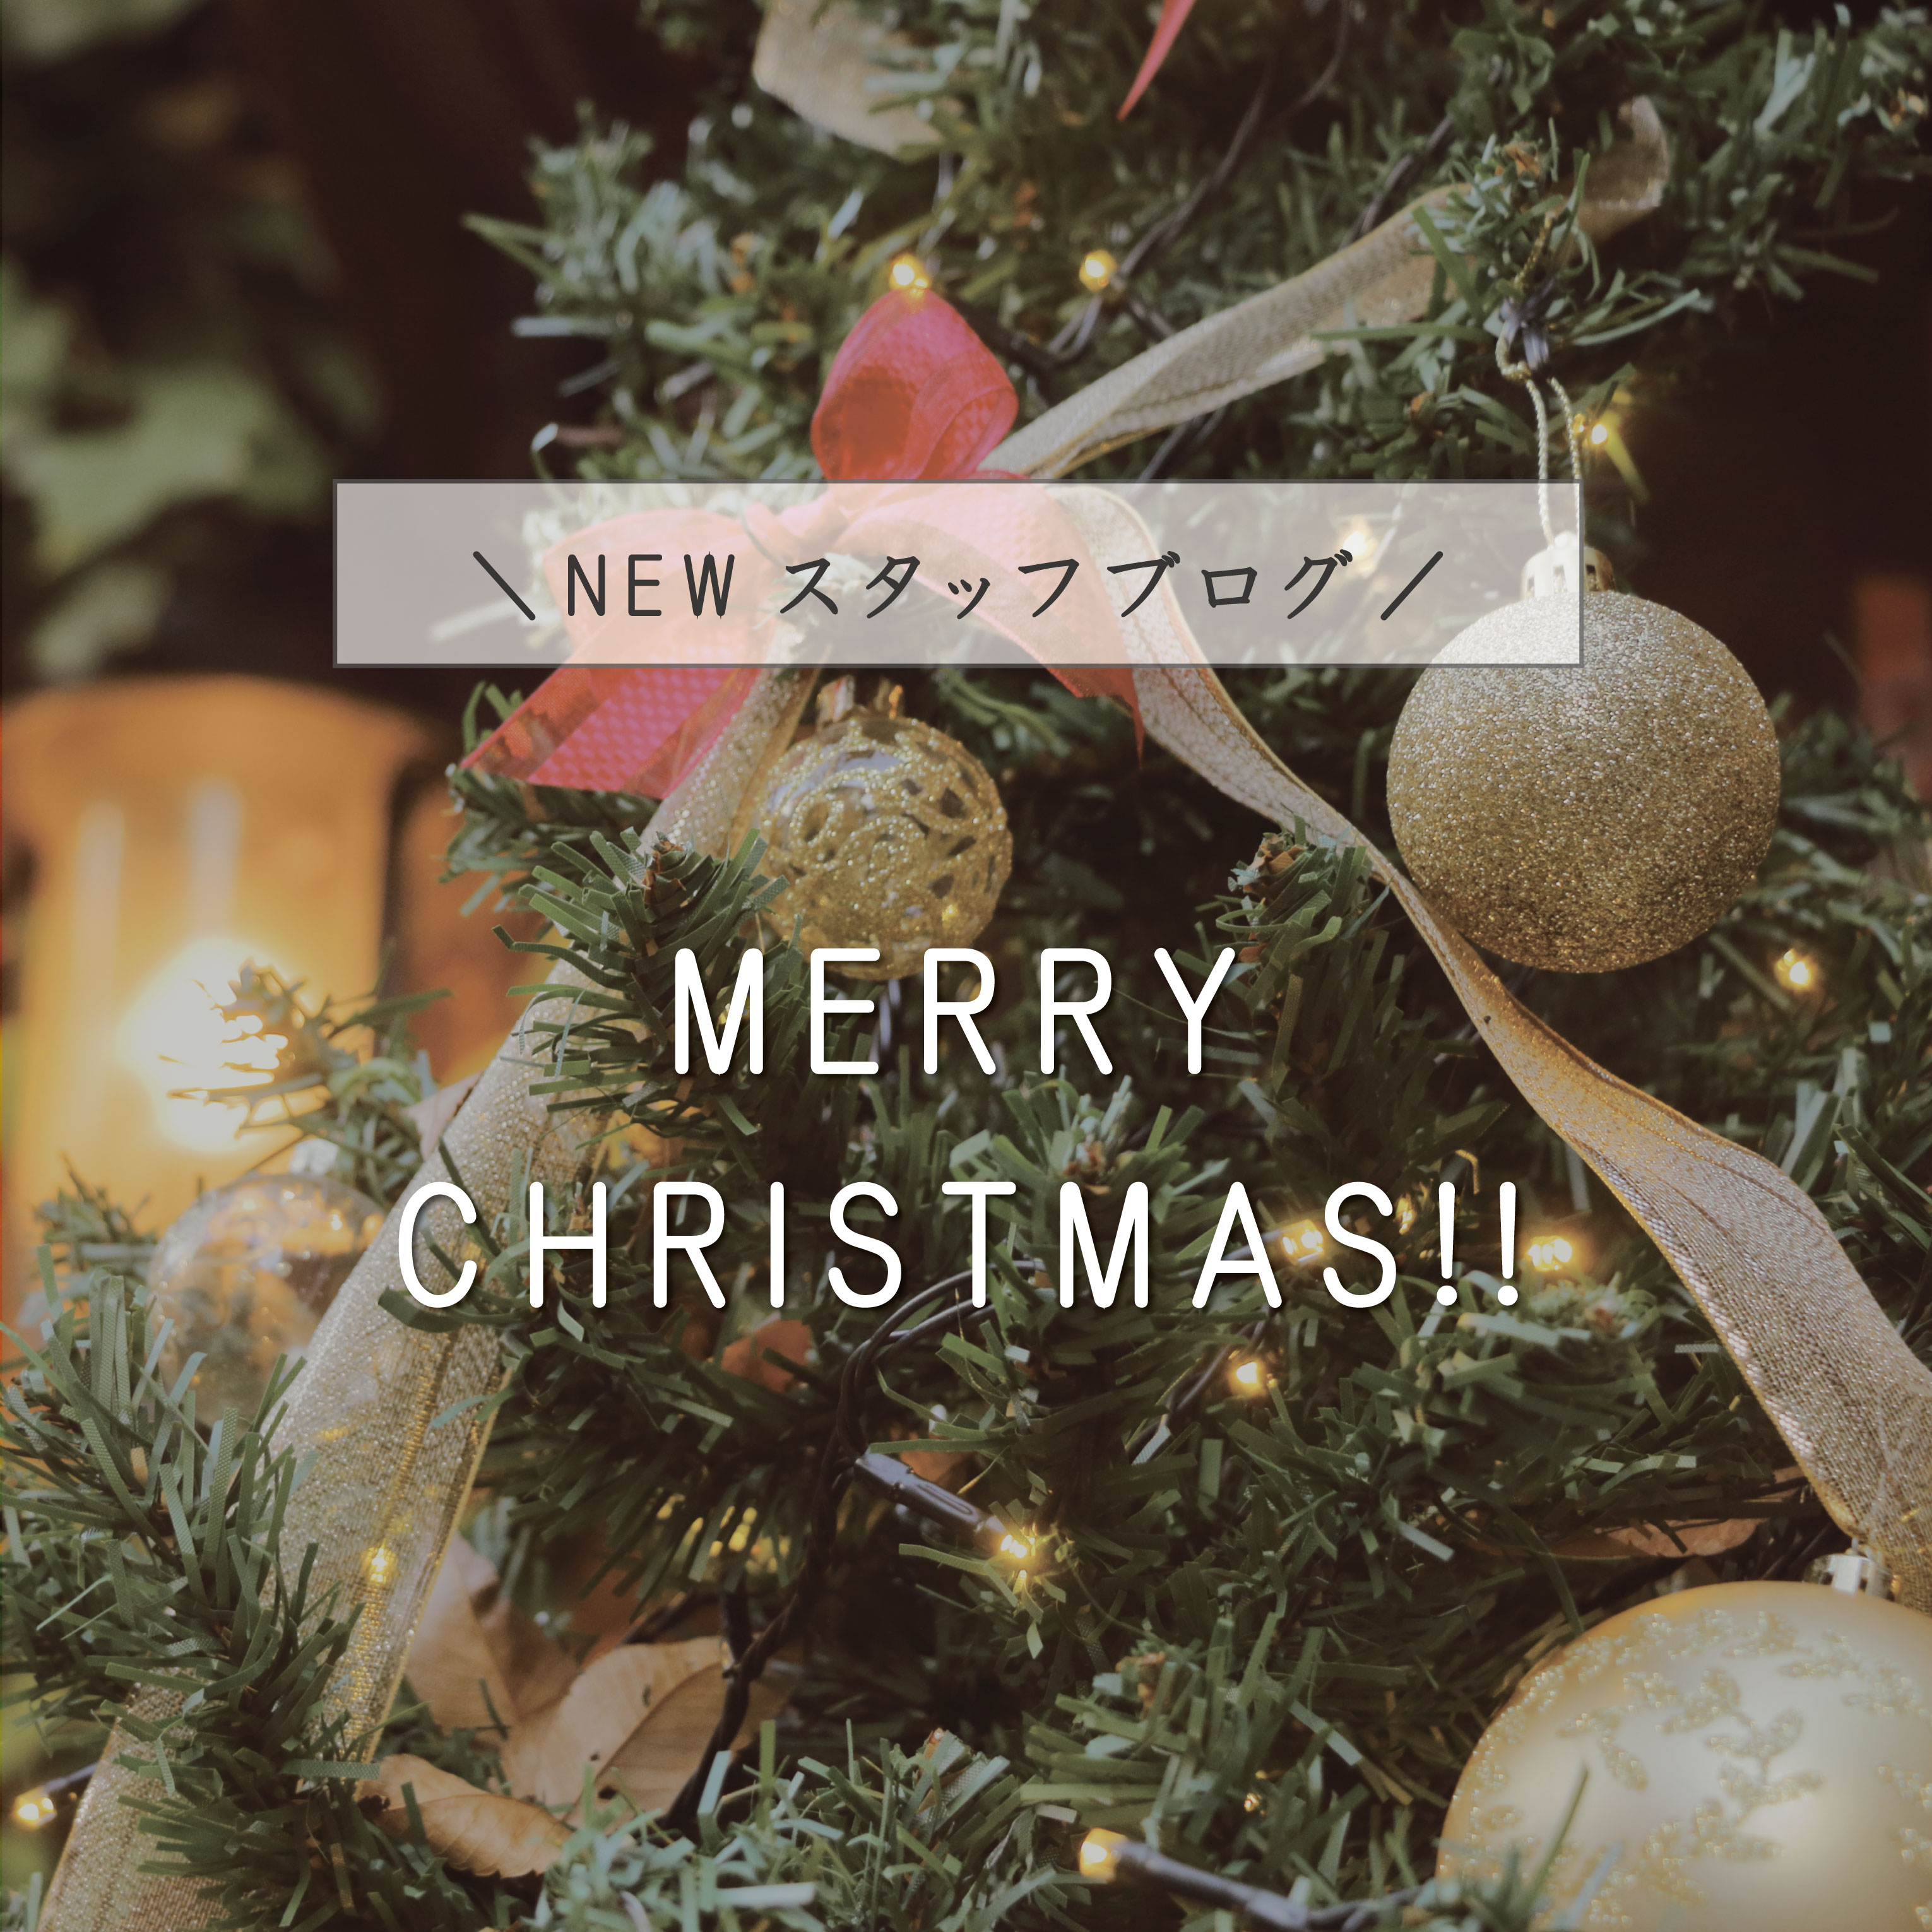 We wish a Merry Christmas!🎄🎅 画像